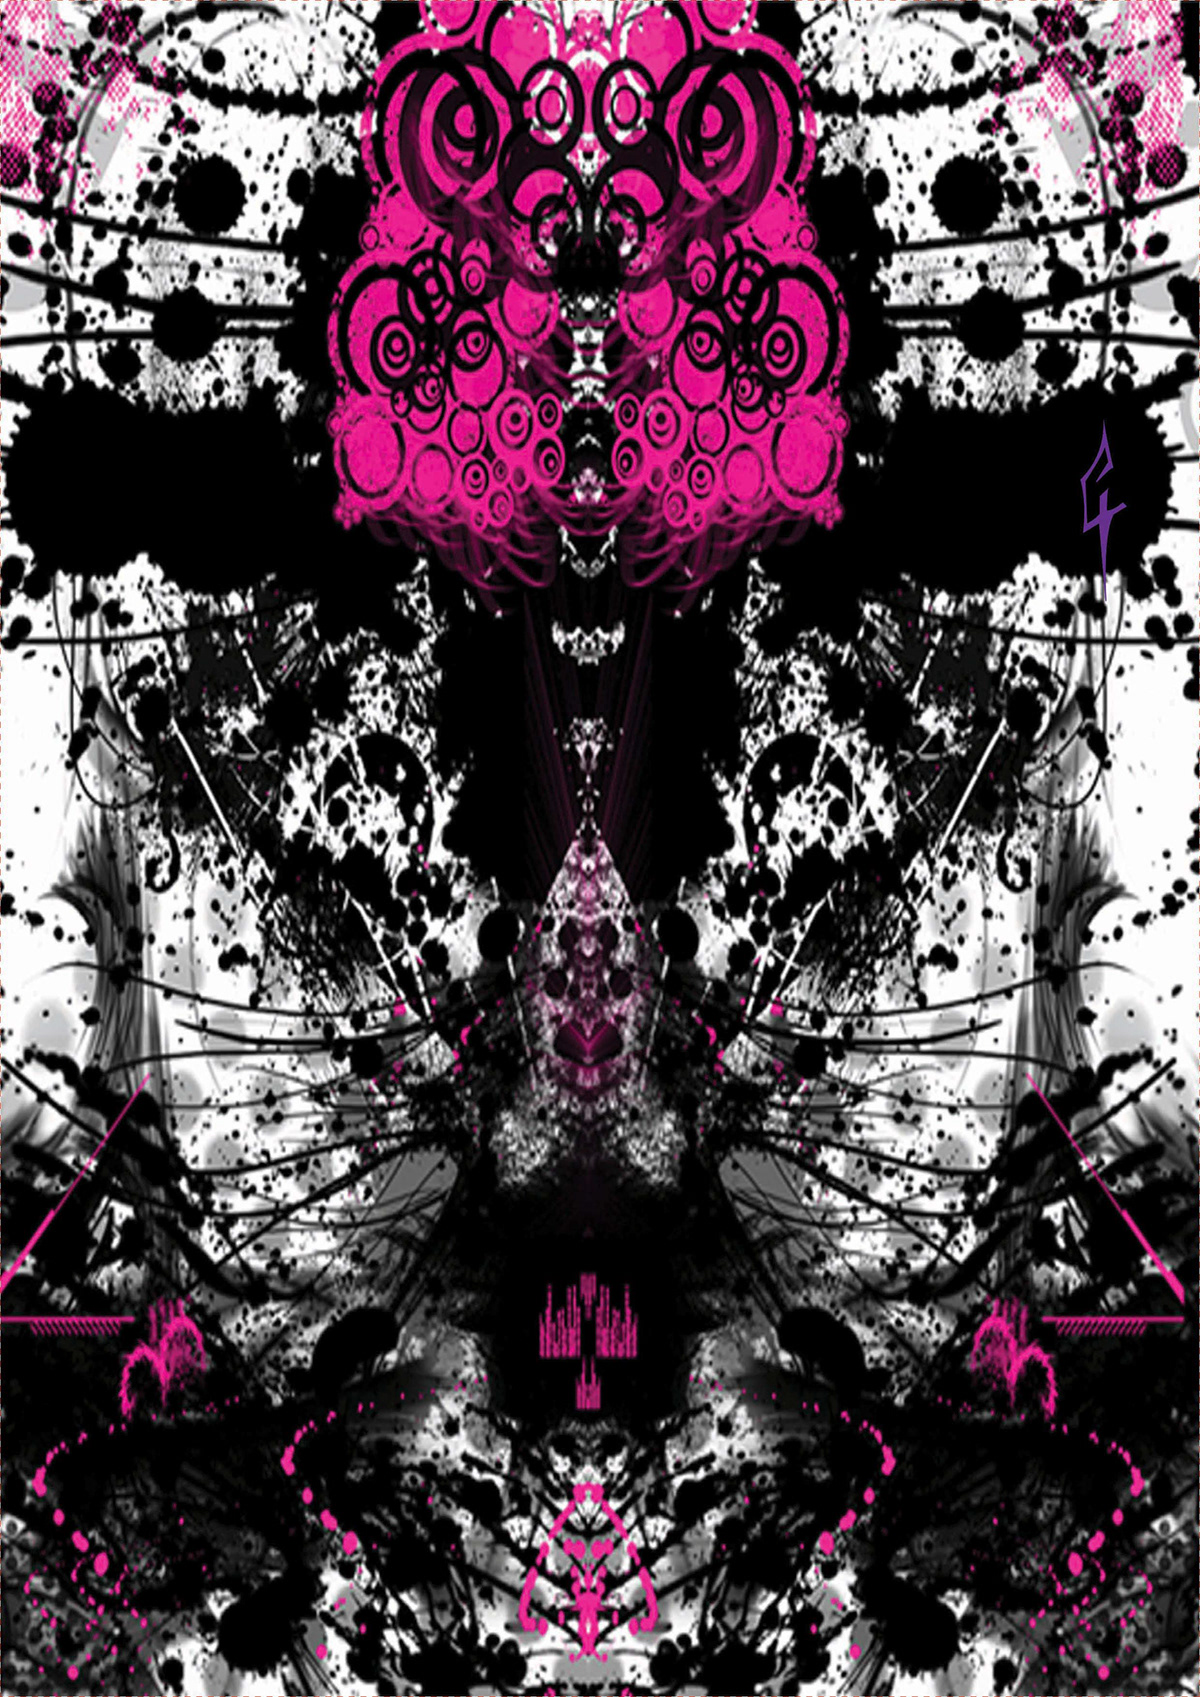 graphic design media mixed copyright art artist splatter print poster face abstract